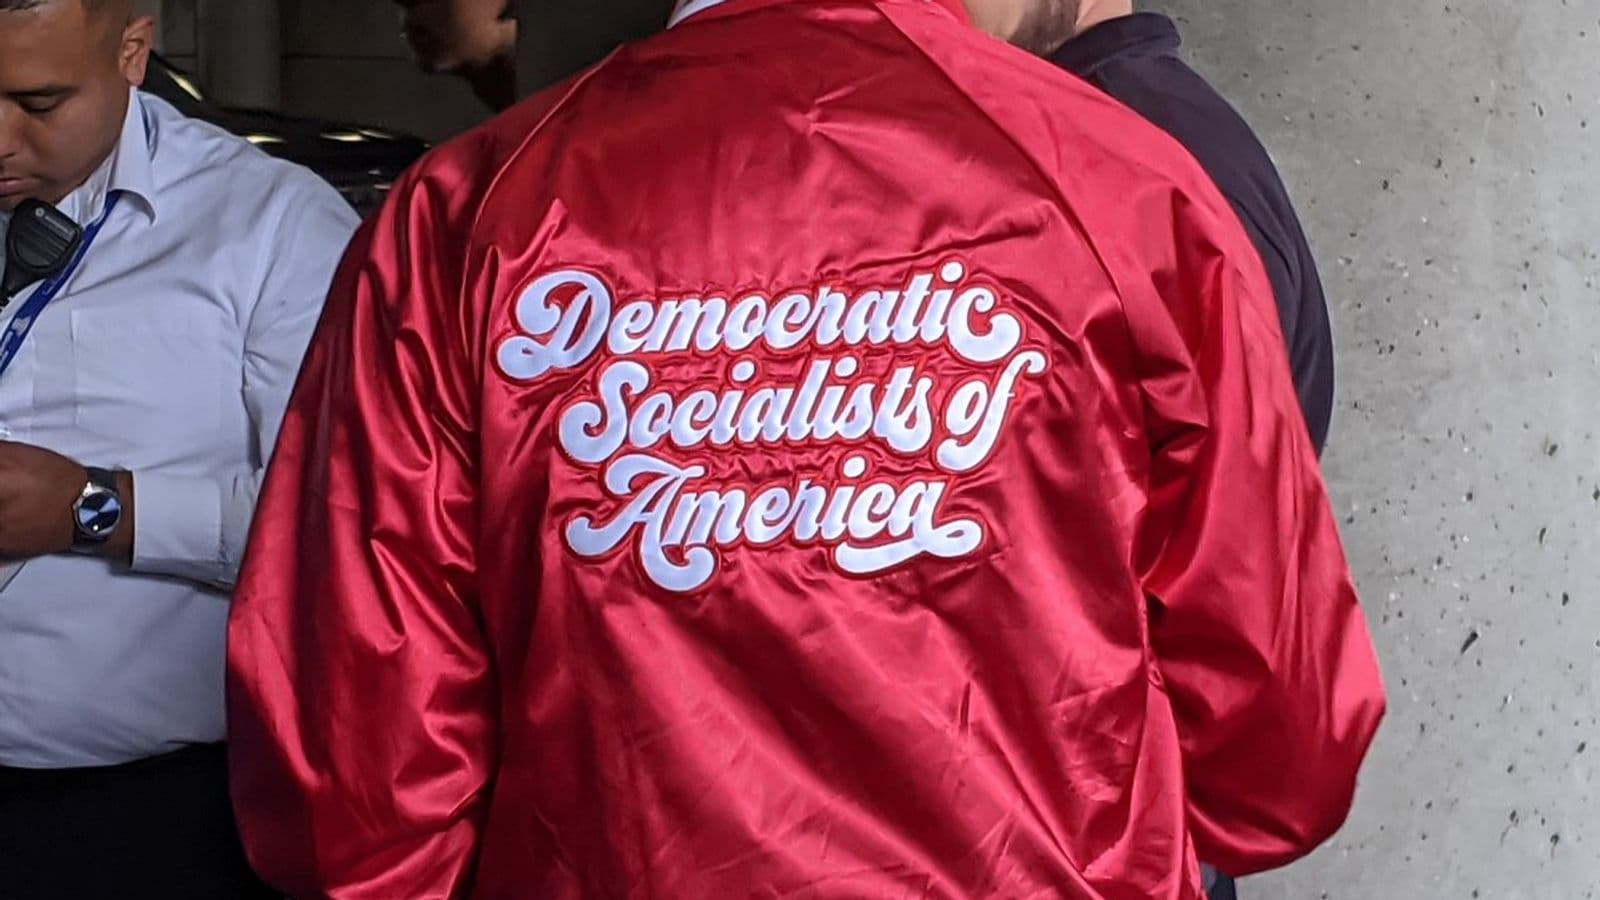 Democratic Socialists of America jacket at a Bernie Sanders rally,